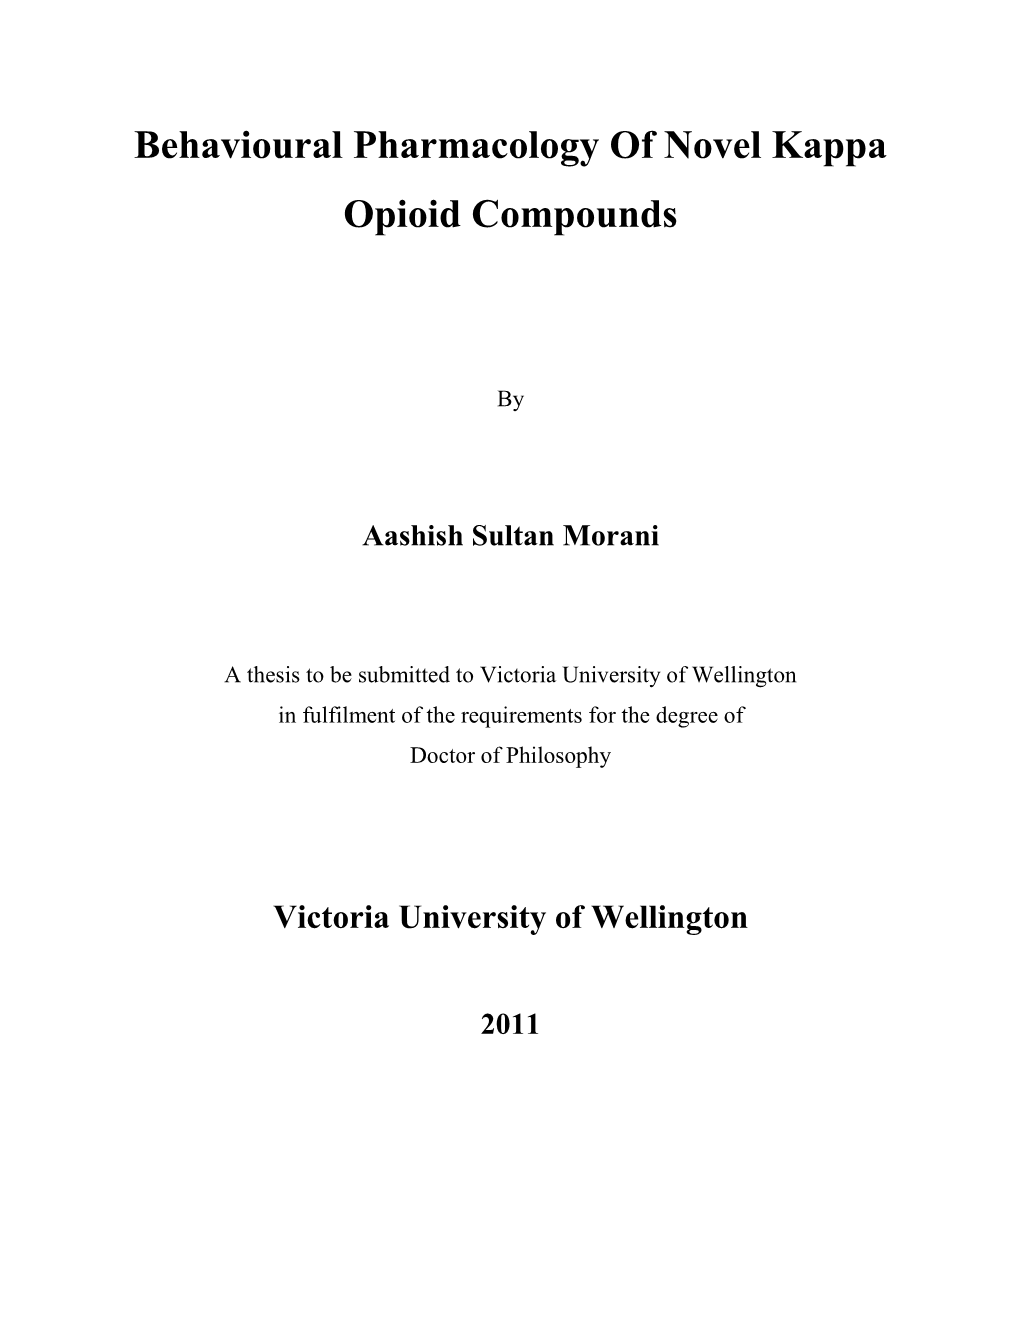 Behavioural Pharmacology of Novel Kappa Opioid Compounds